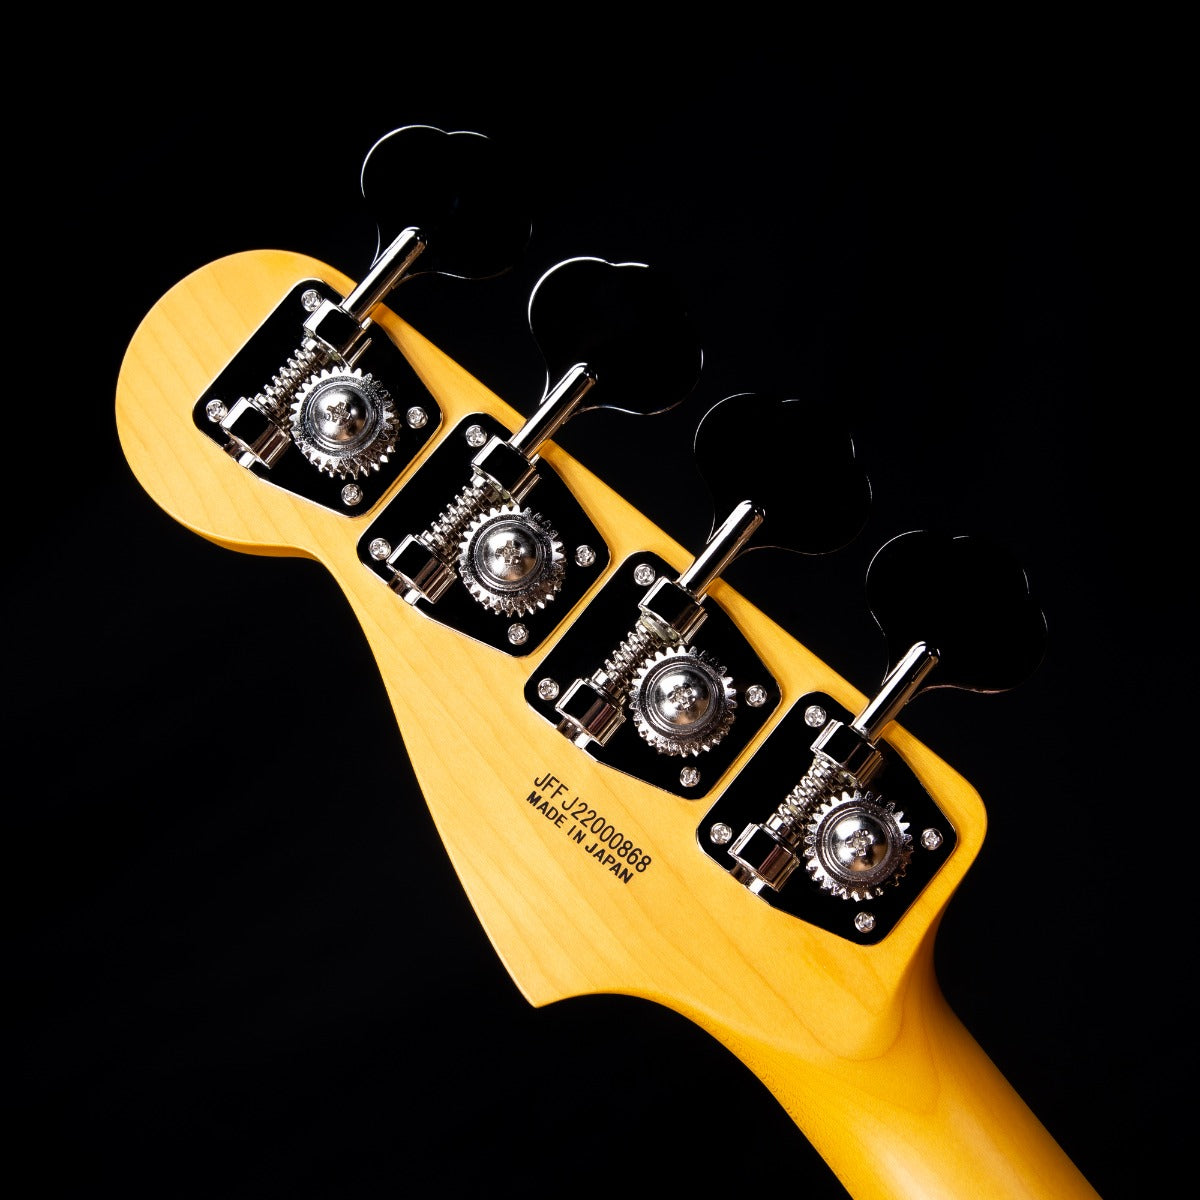 Fender Aerodyne Special Precision Bass - Bright White SN JFFJ22000868